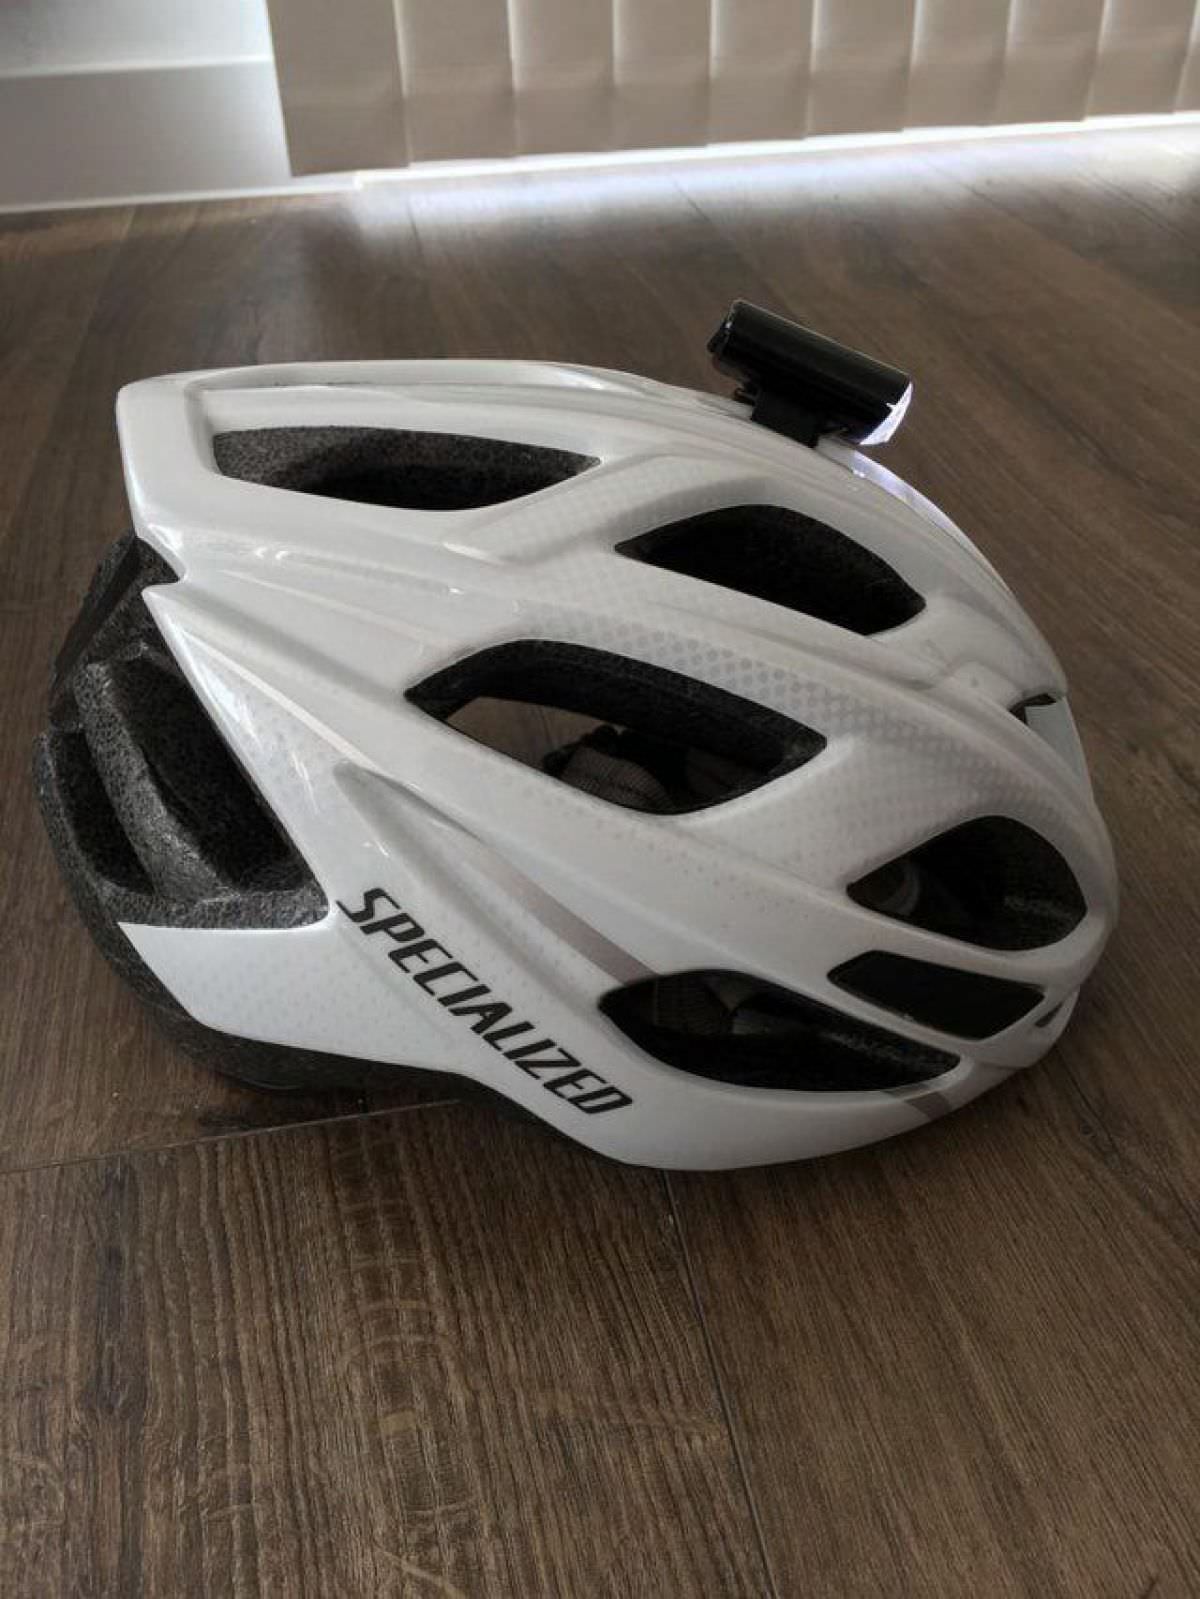 bicycling helmet